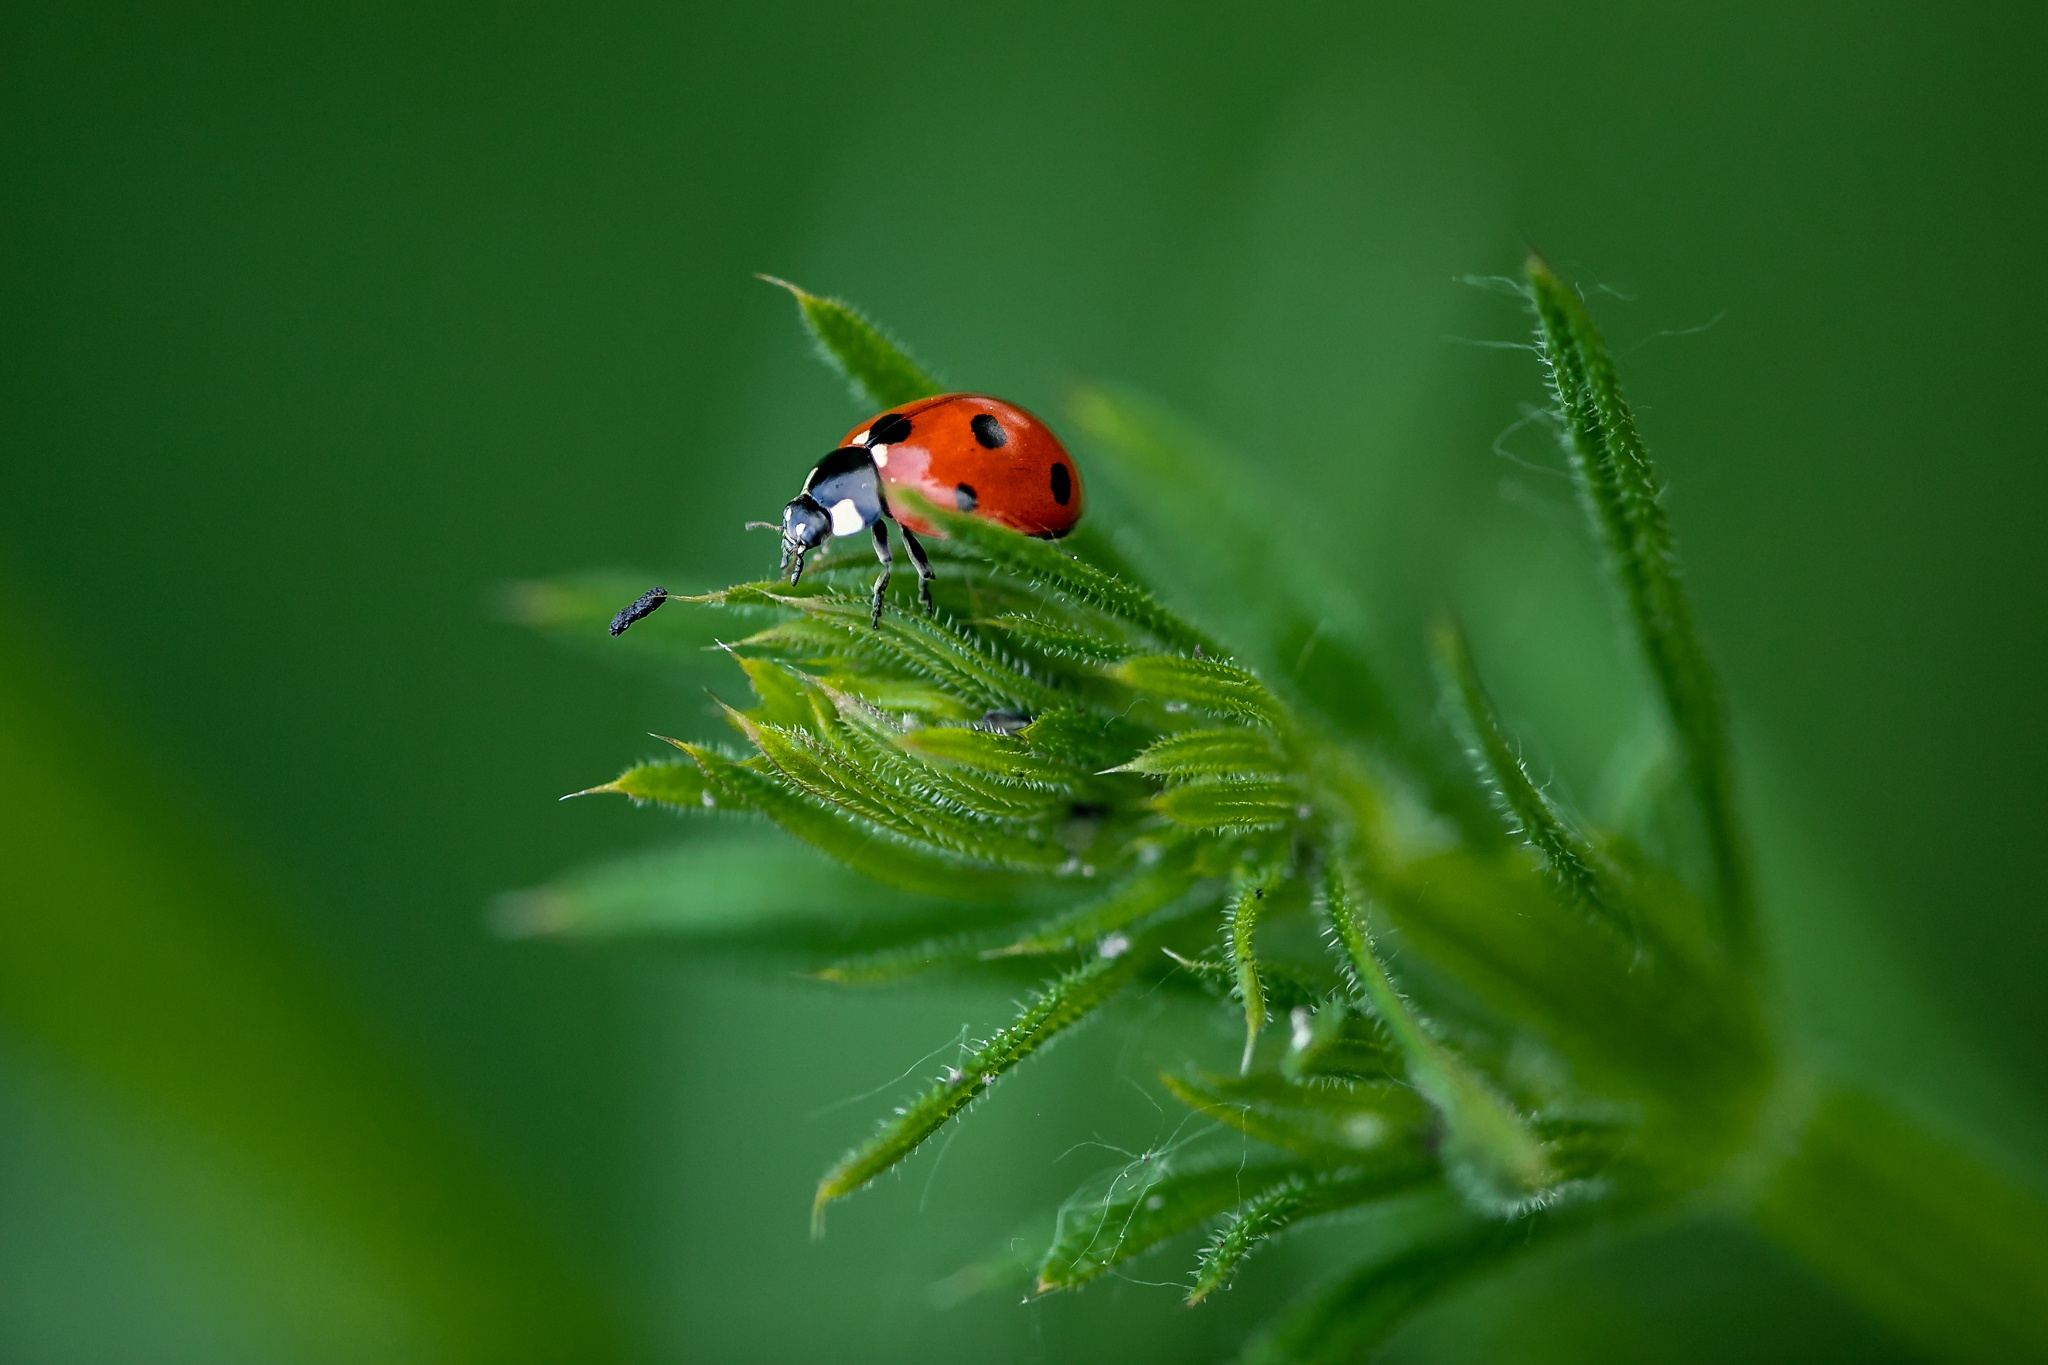 Grass Insect Ladybug Macro 2048x1365